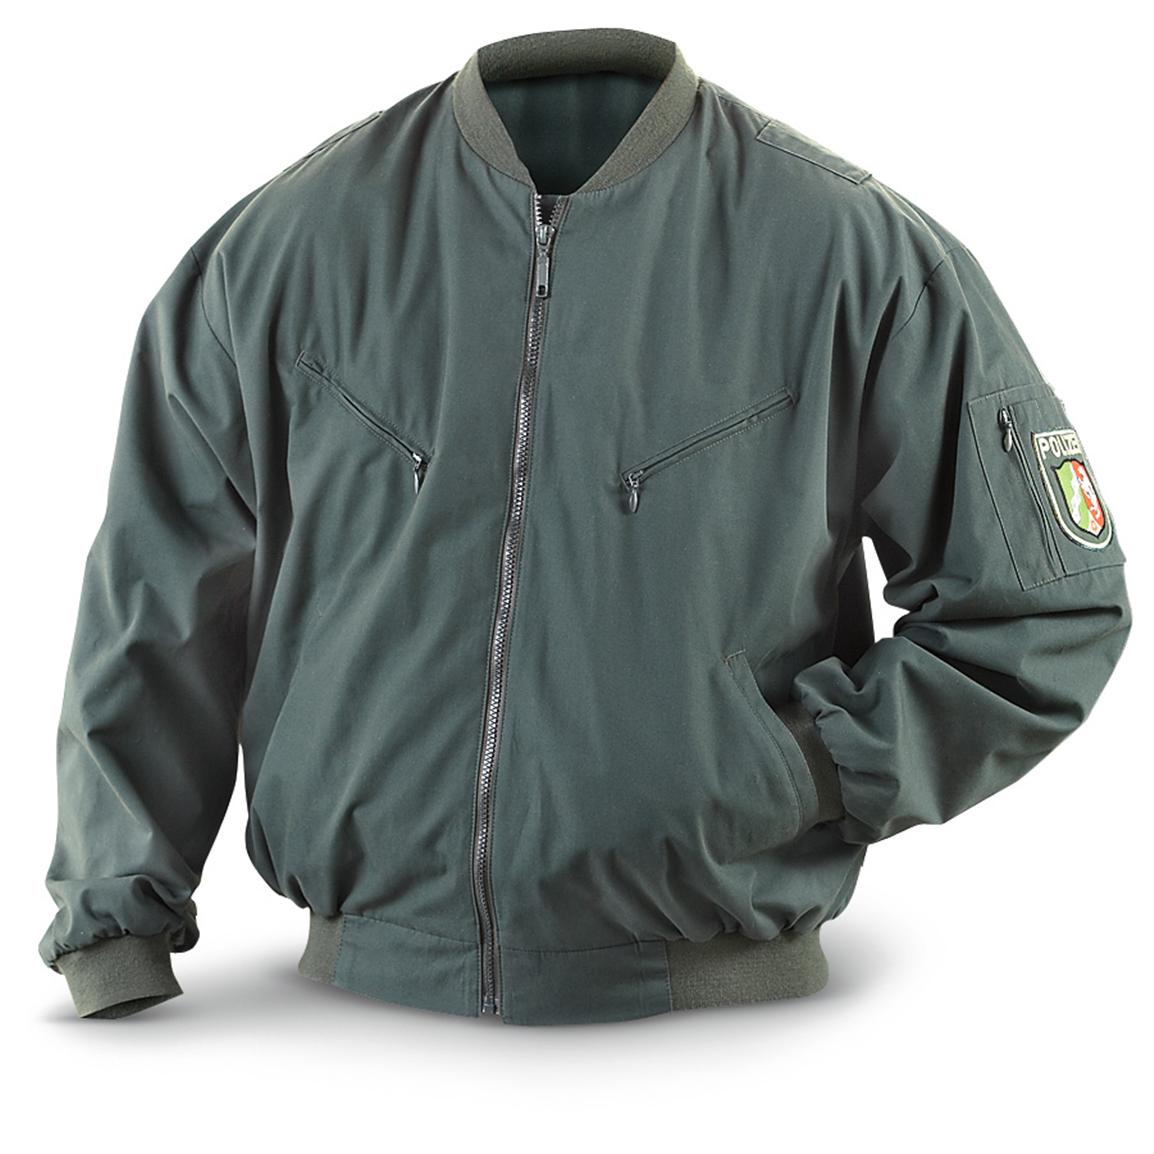 Used German Military Police Jacket, Dark Green - 230097, Uninsulated ...